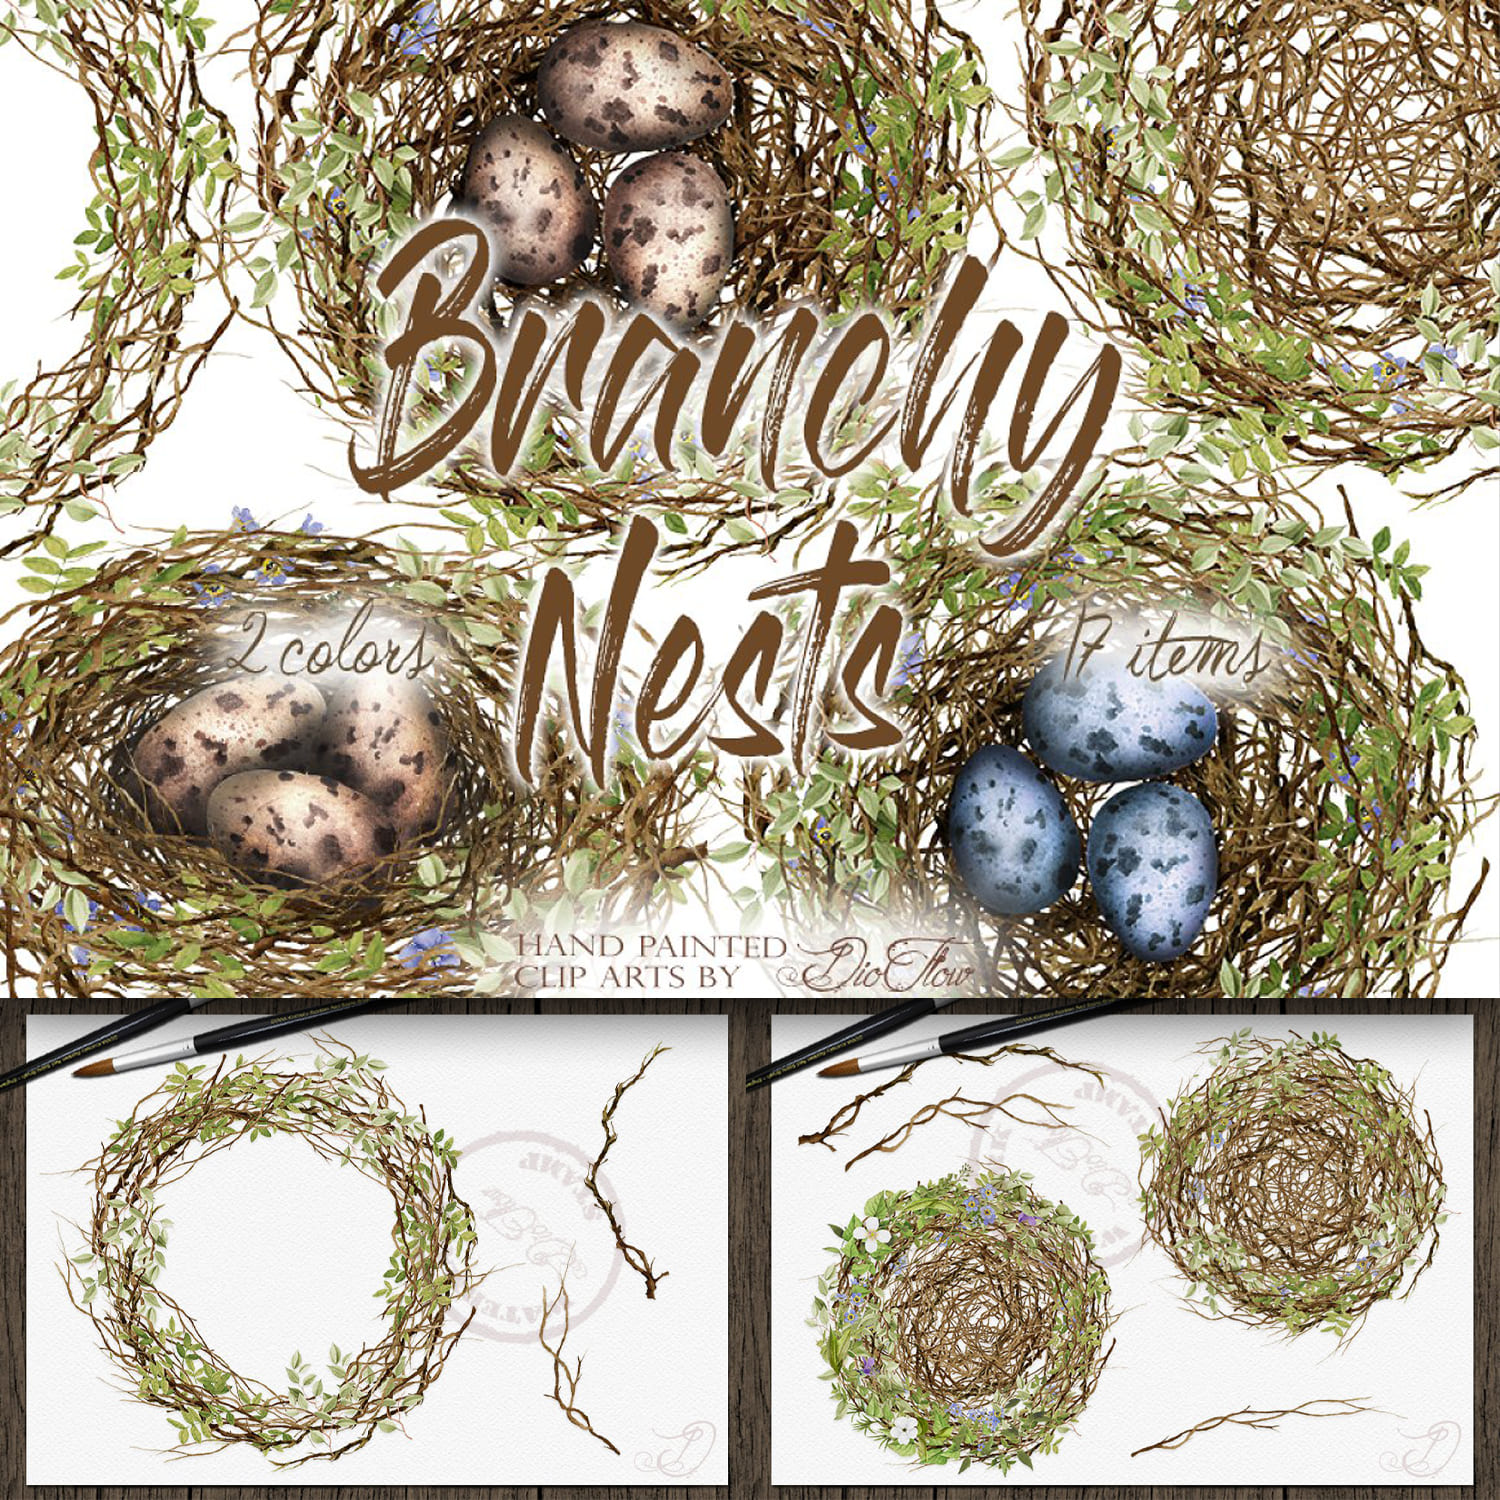 Branchy Nest Watercolor Clip Art cover.